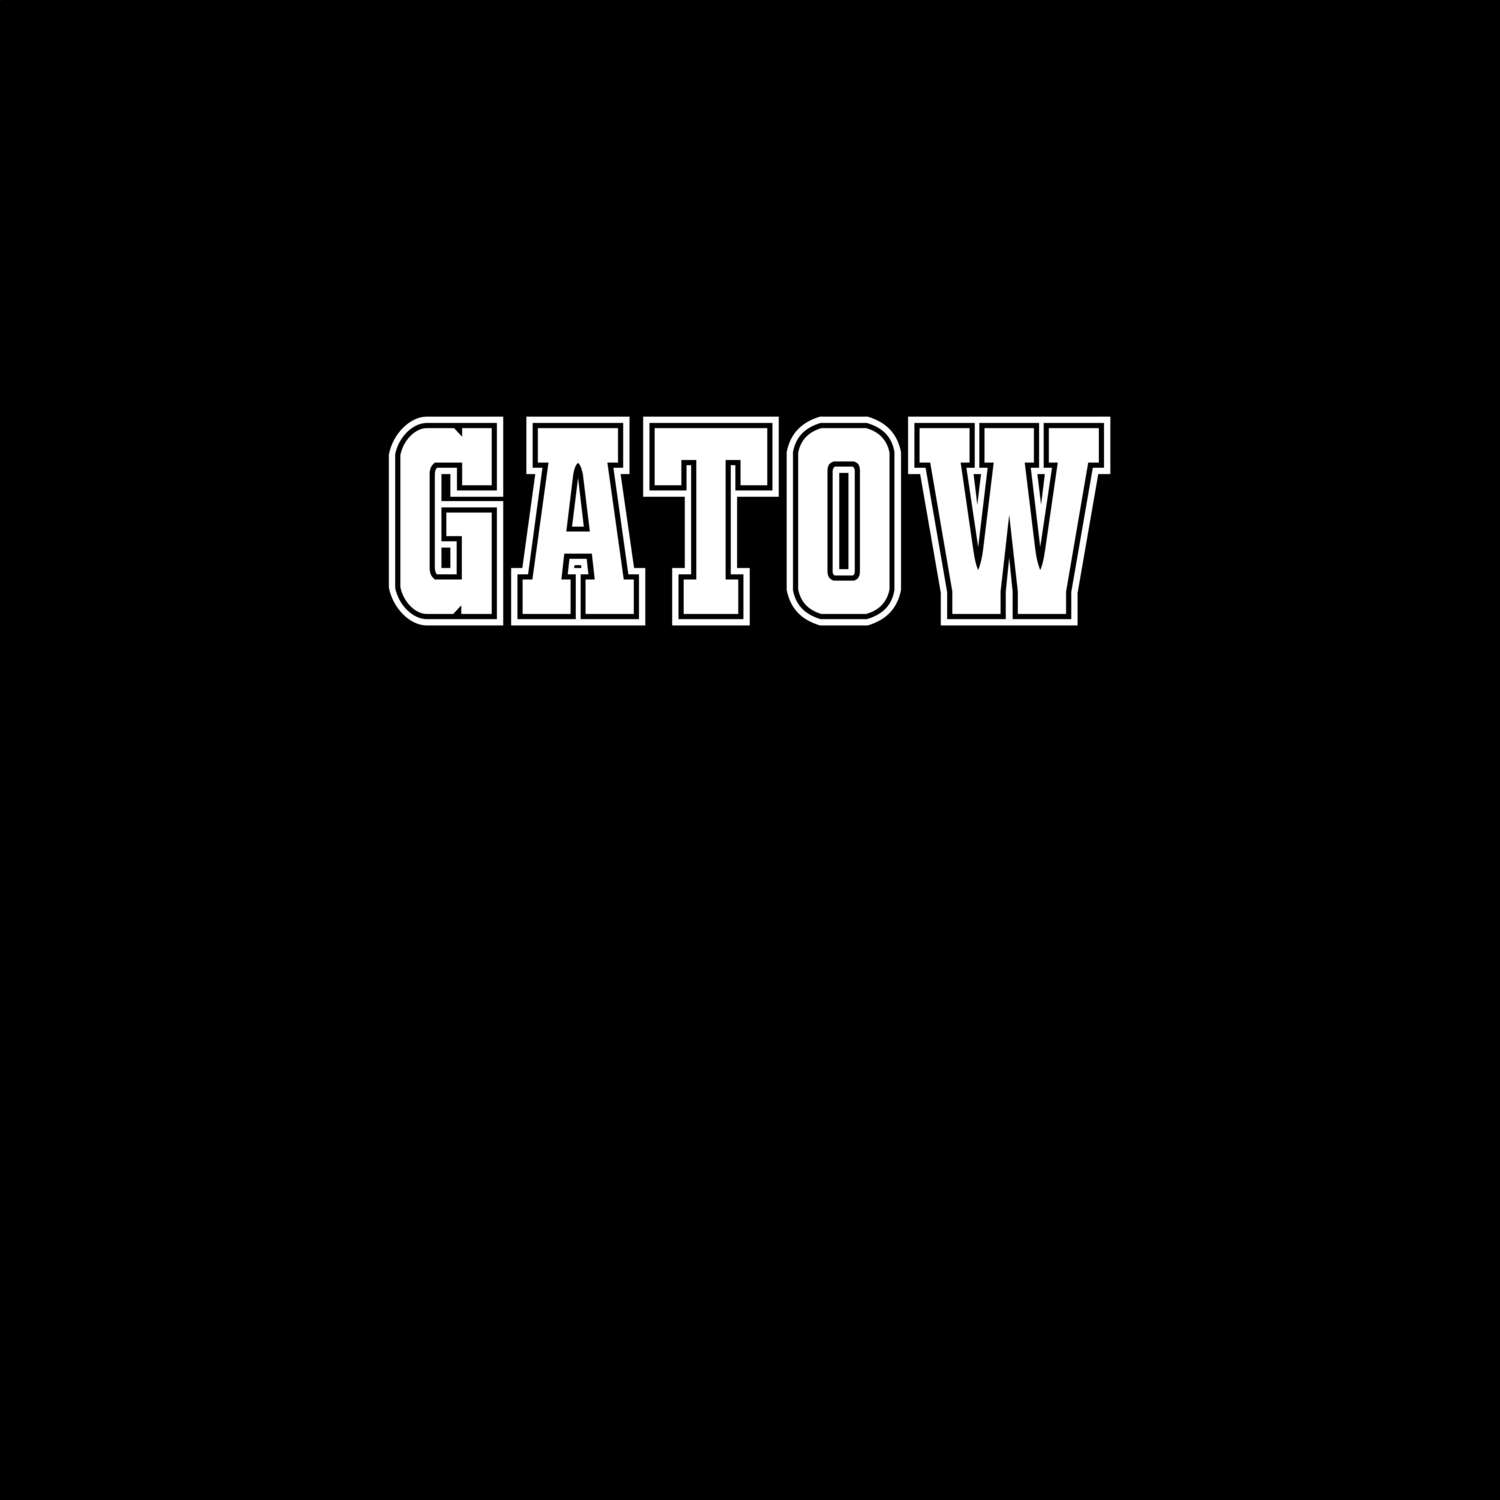 Gatow T-Shirt »Classic«